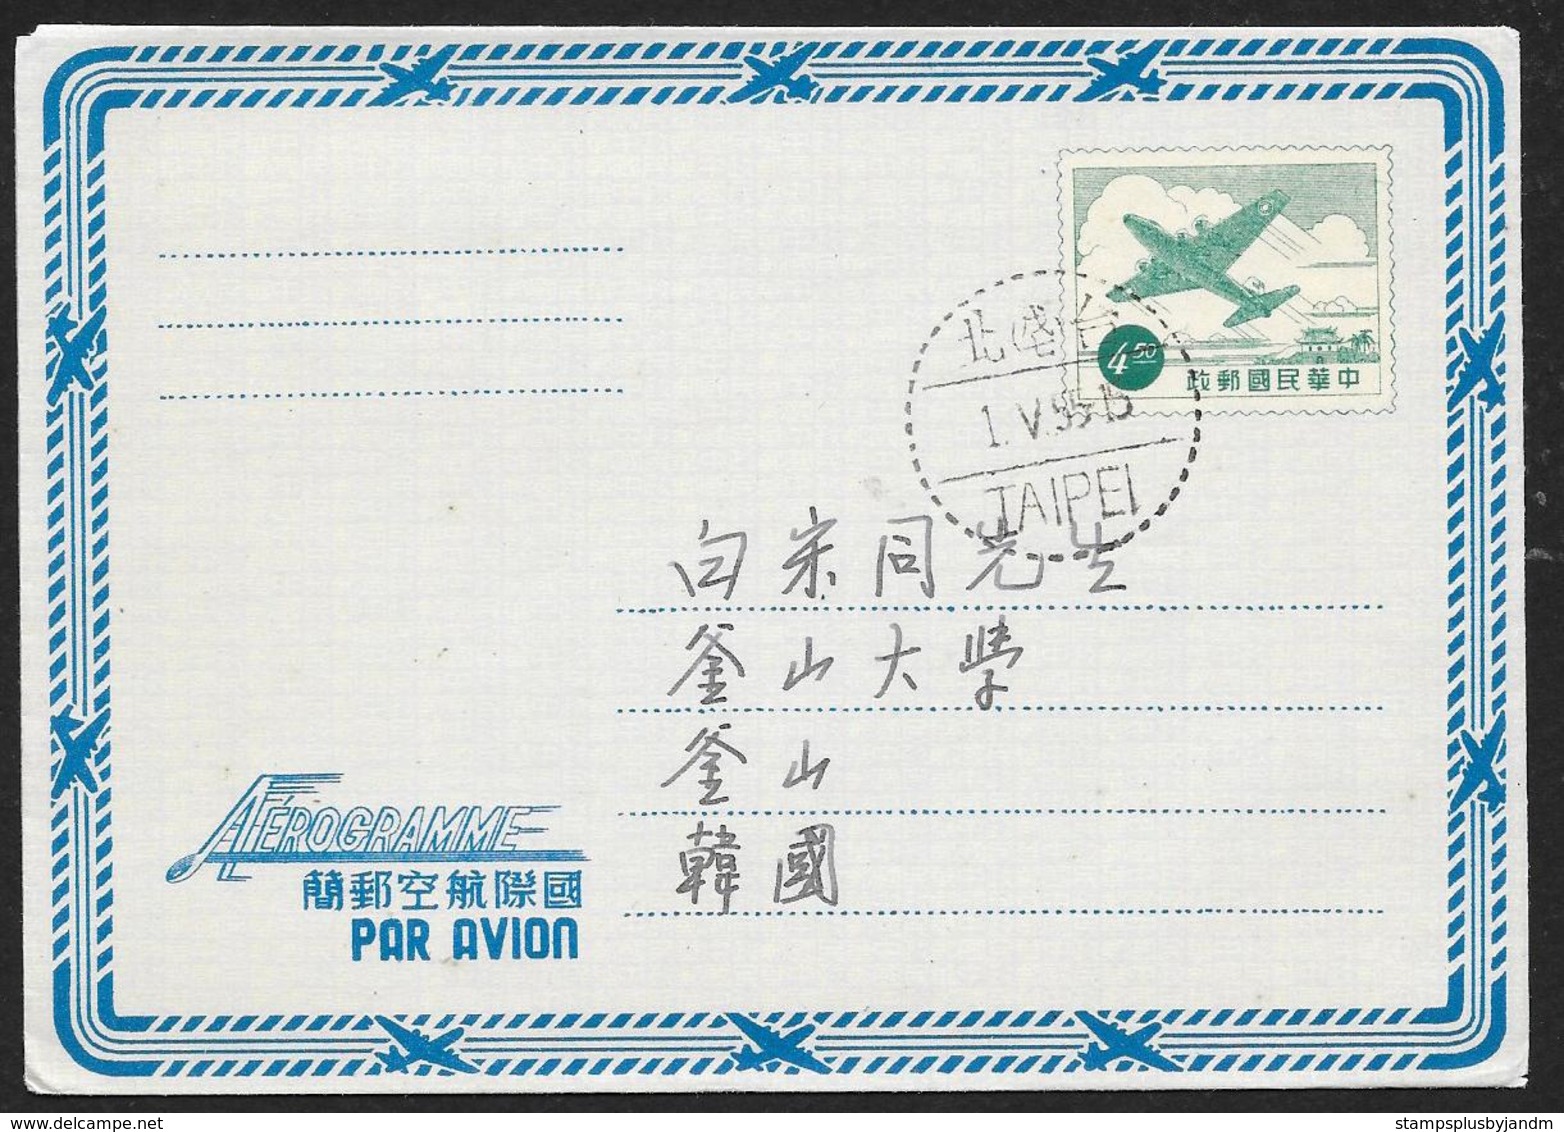 REPUBLIC OF CHINA (TAIWAN) Aerogramme $4.50 Airplane 1955 Taipei Cancel! STK#X21217 - Entiers Postaux